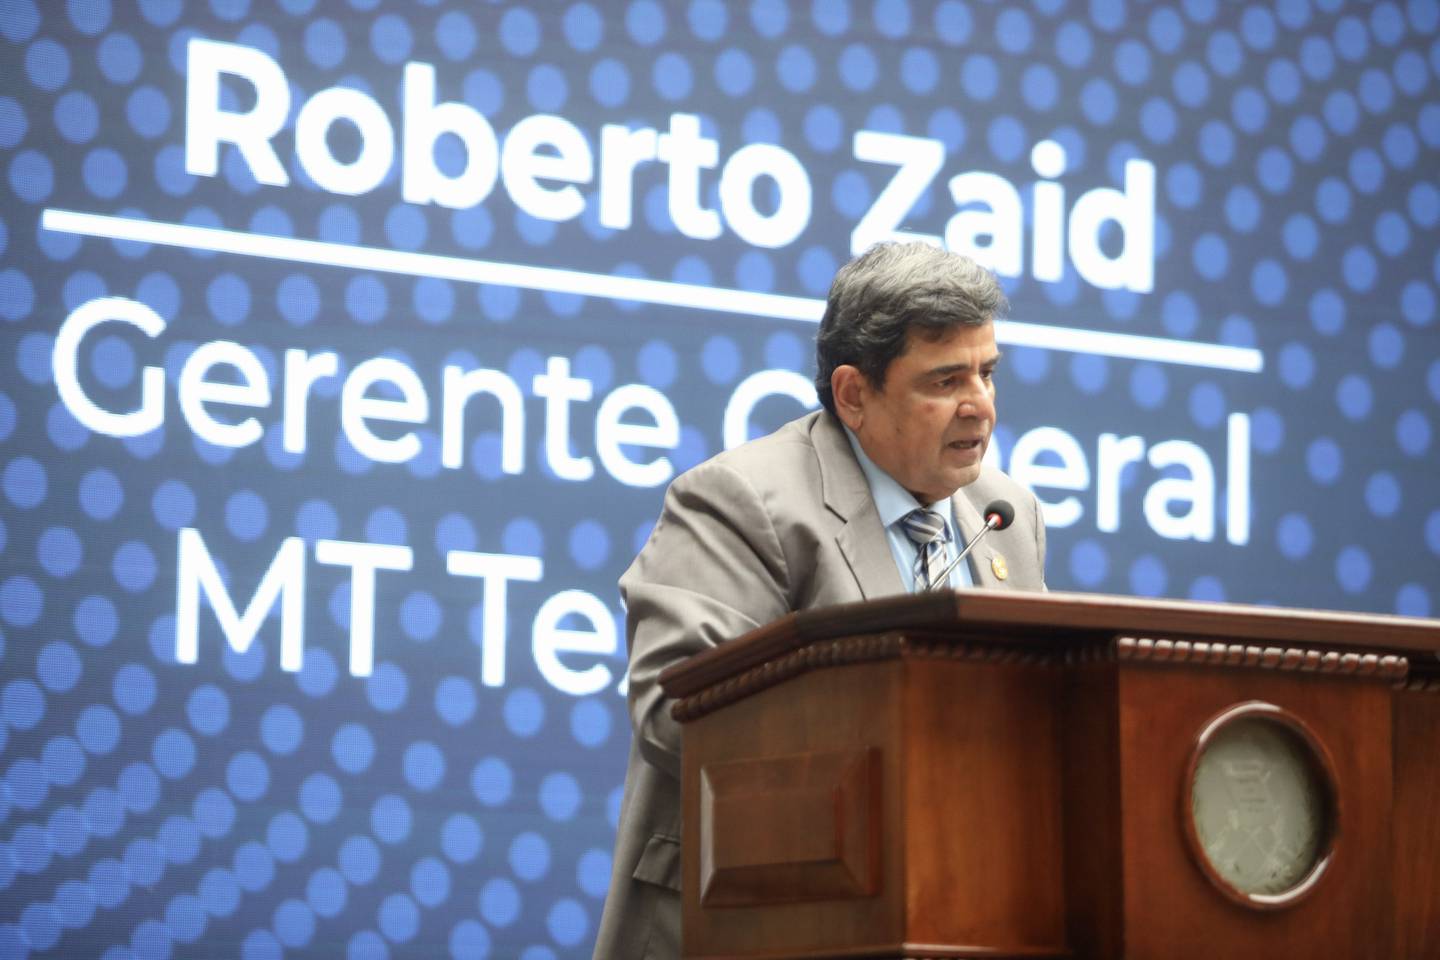 Roberto Zaid, gerente general de MT Textiles, S.A. informó sobre la nueva planta de hilatura que generará 300 empleos.dfd